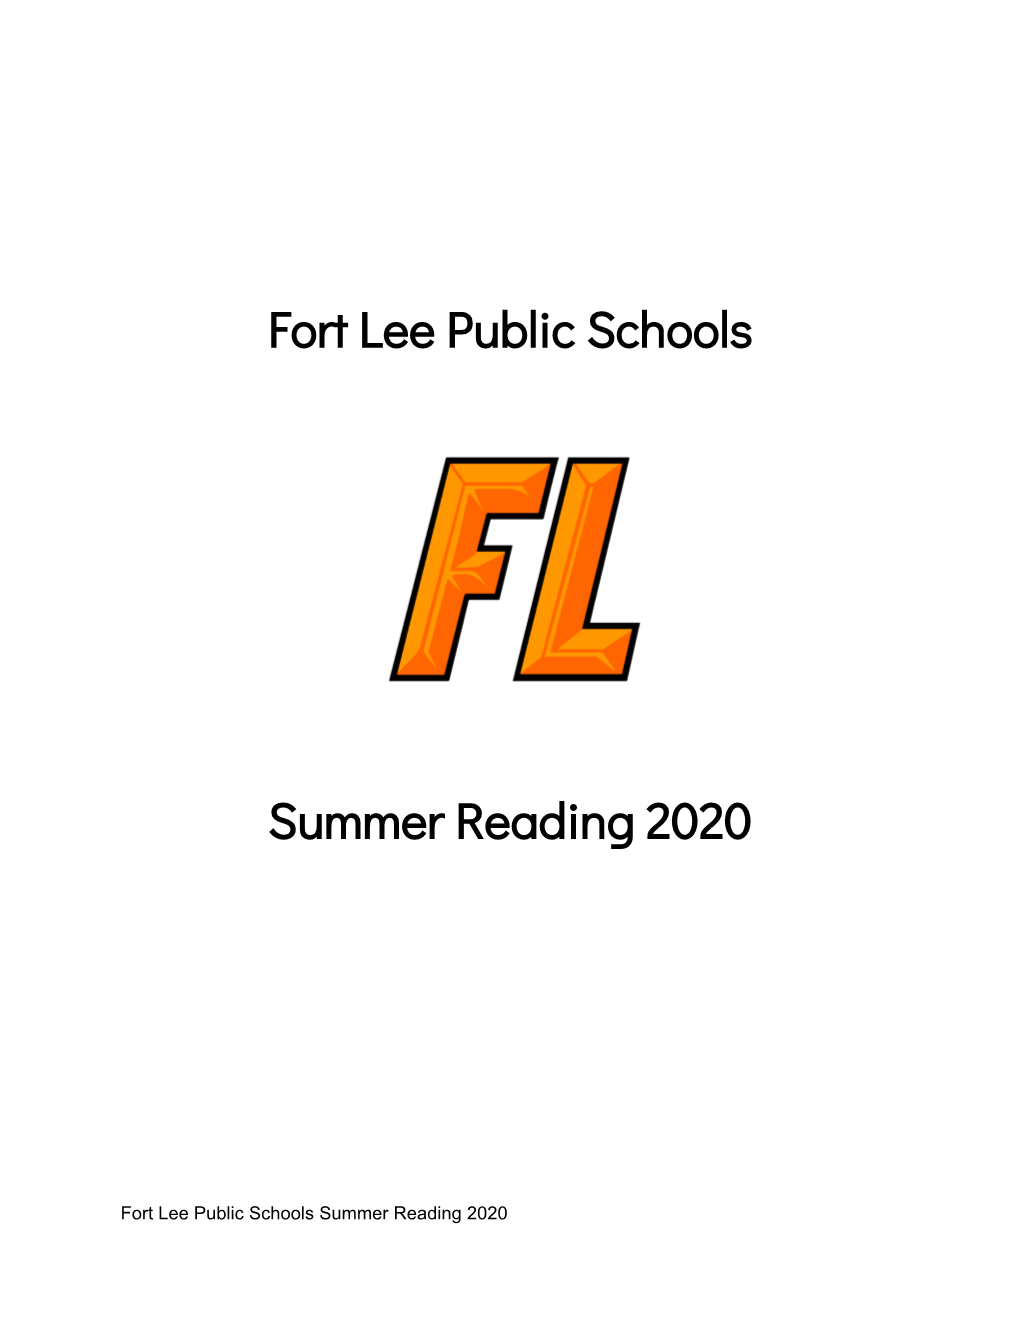 Fort Lee Public Schools Summer Reading 2020